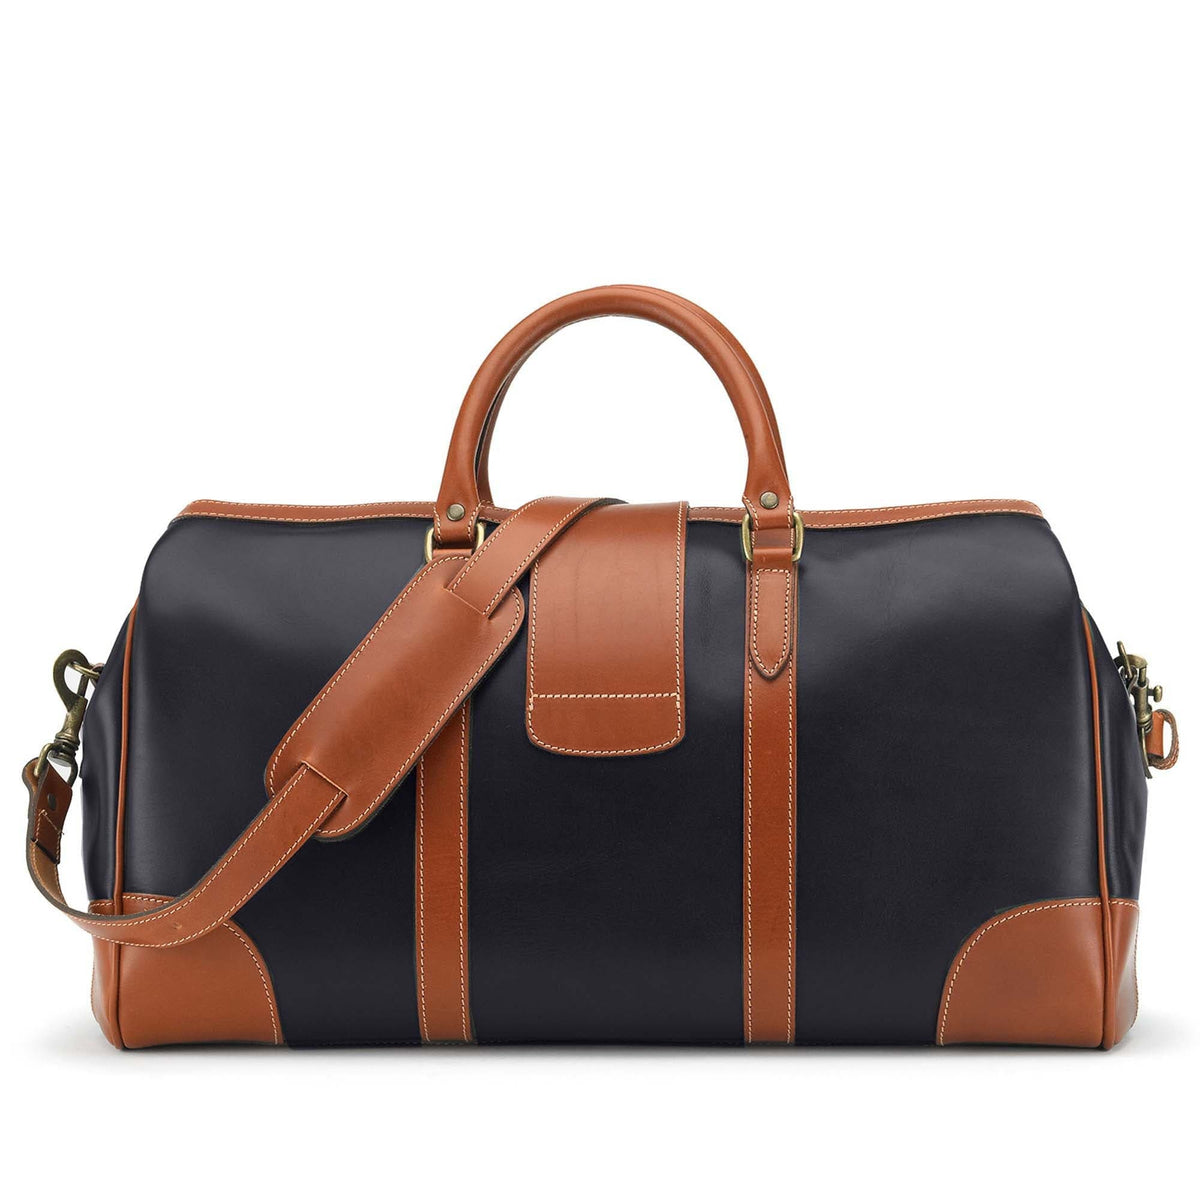 Tusting Travel Chellington Leather Holdall Luggage